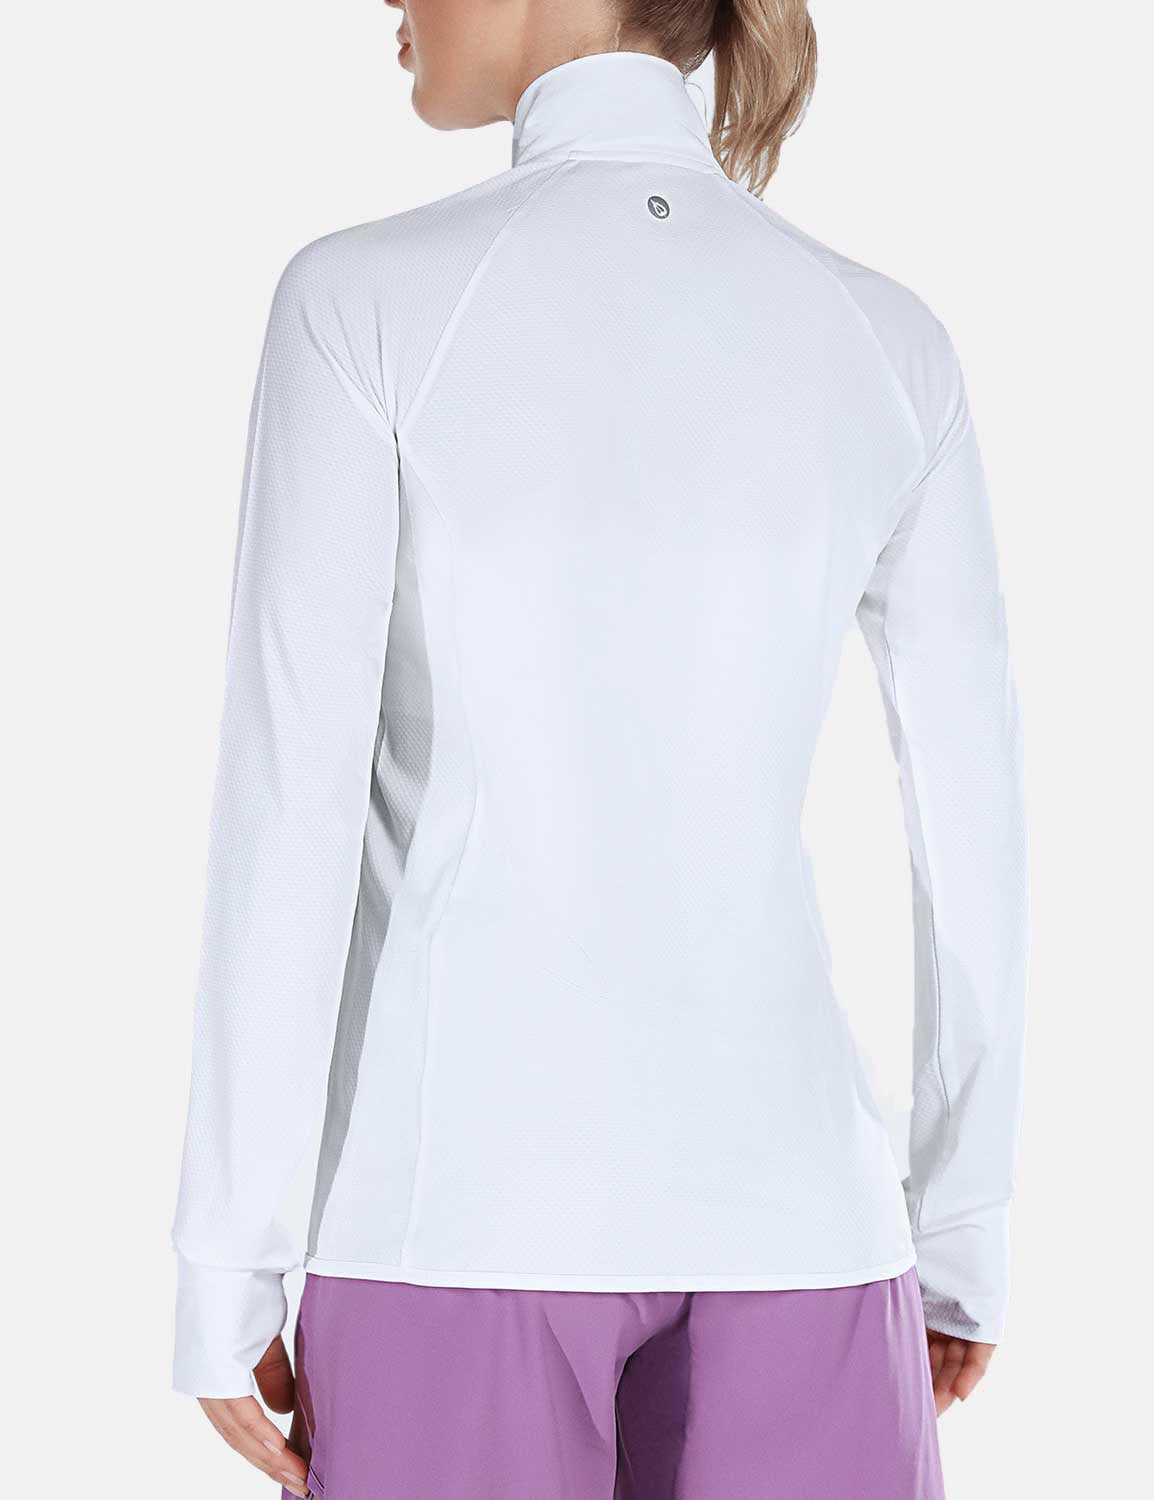 BALEAF Women's UPF 50+ Long Sleeve Zip Pocketed Lightweight Jackets cga018 Lucent White Back